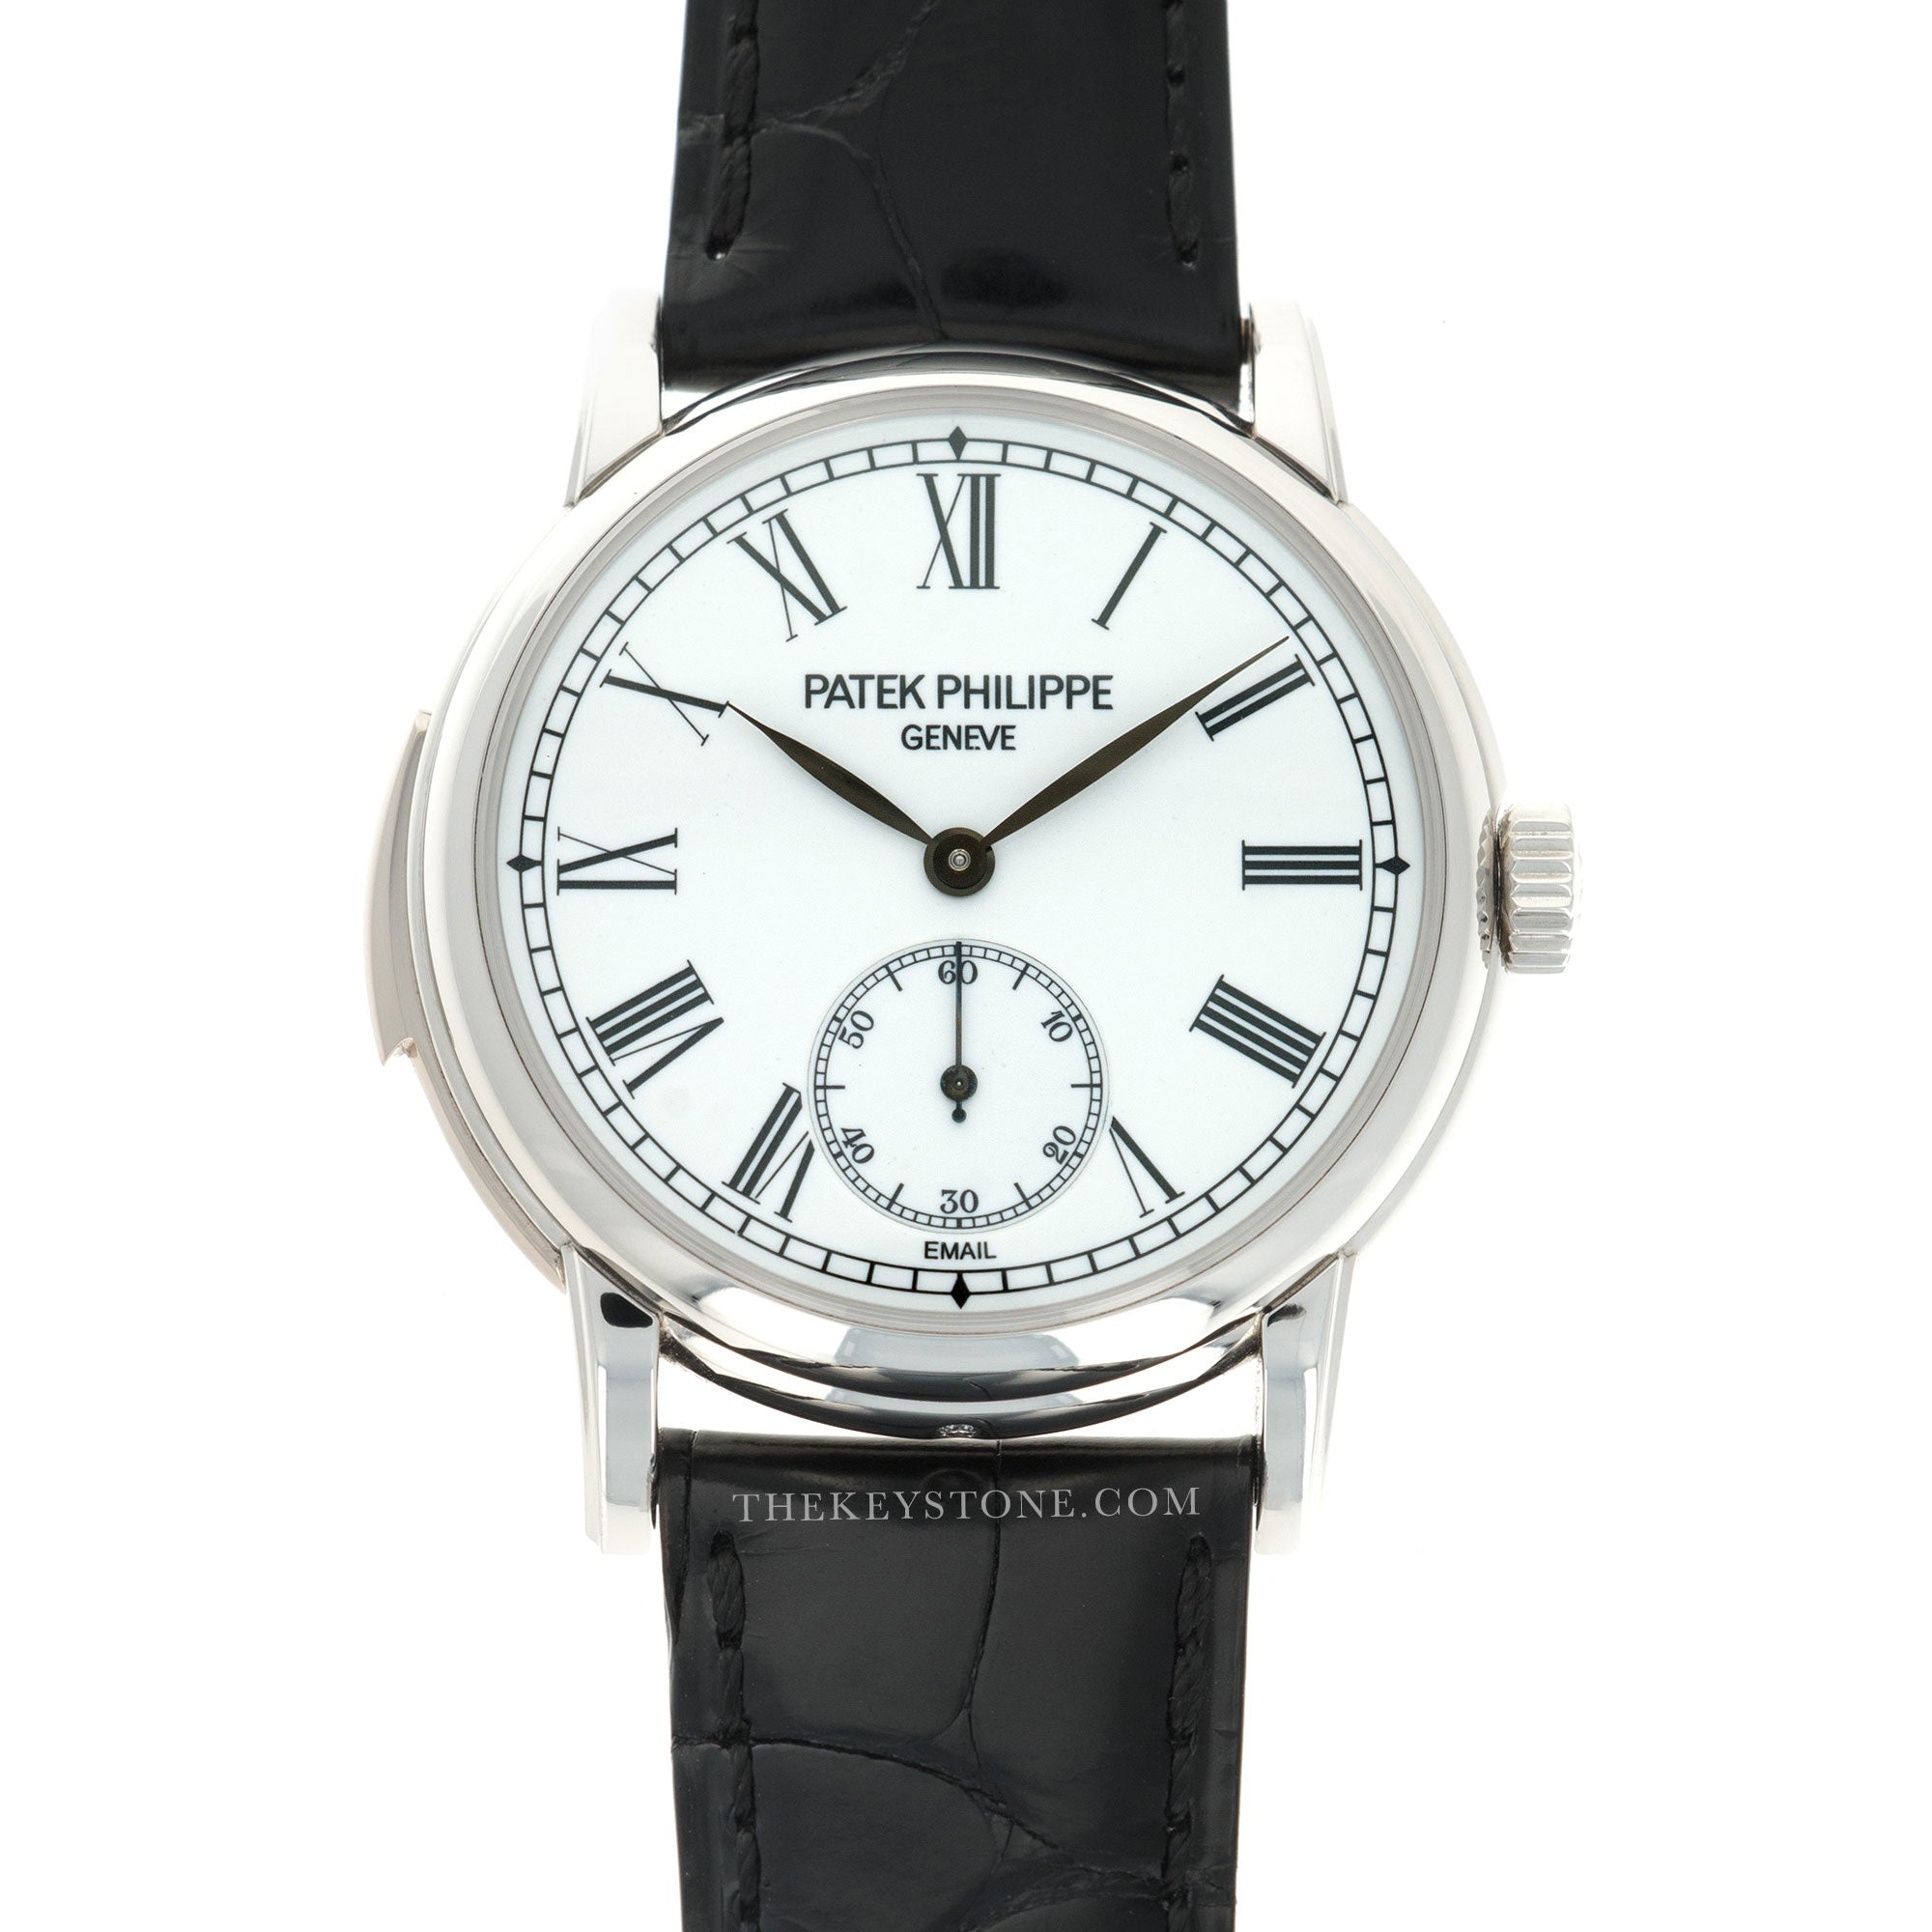 Patek Philippe - Patek Philippe Platinum Minute Repeater Enamel Dial Watch Ref. 5078 - The Keystone Watches